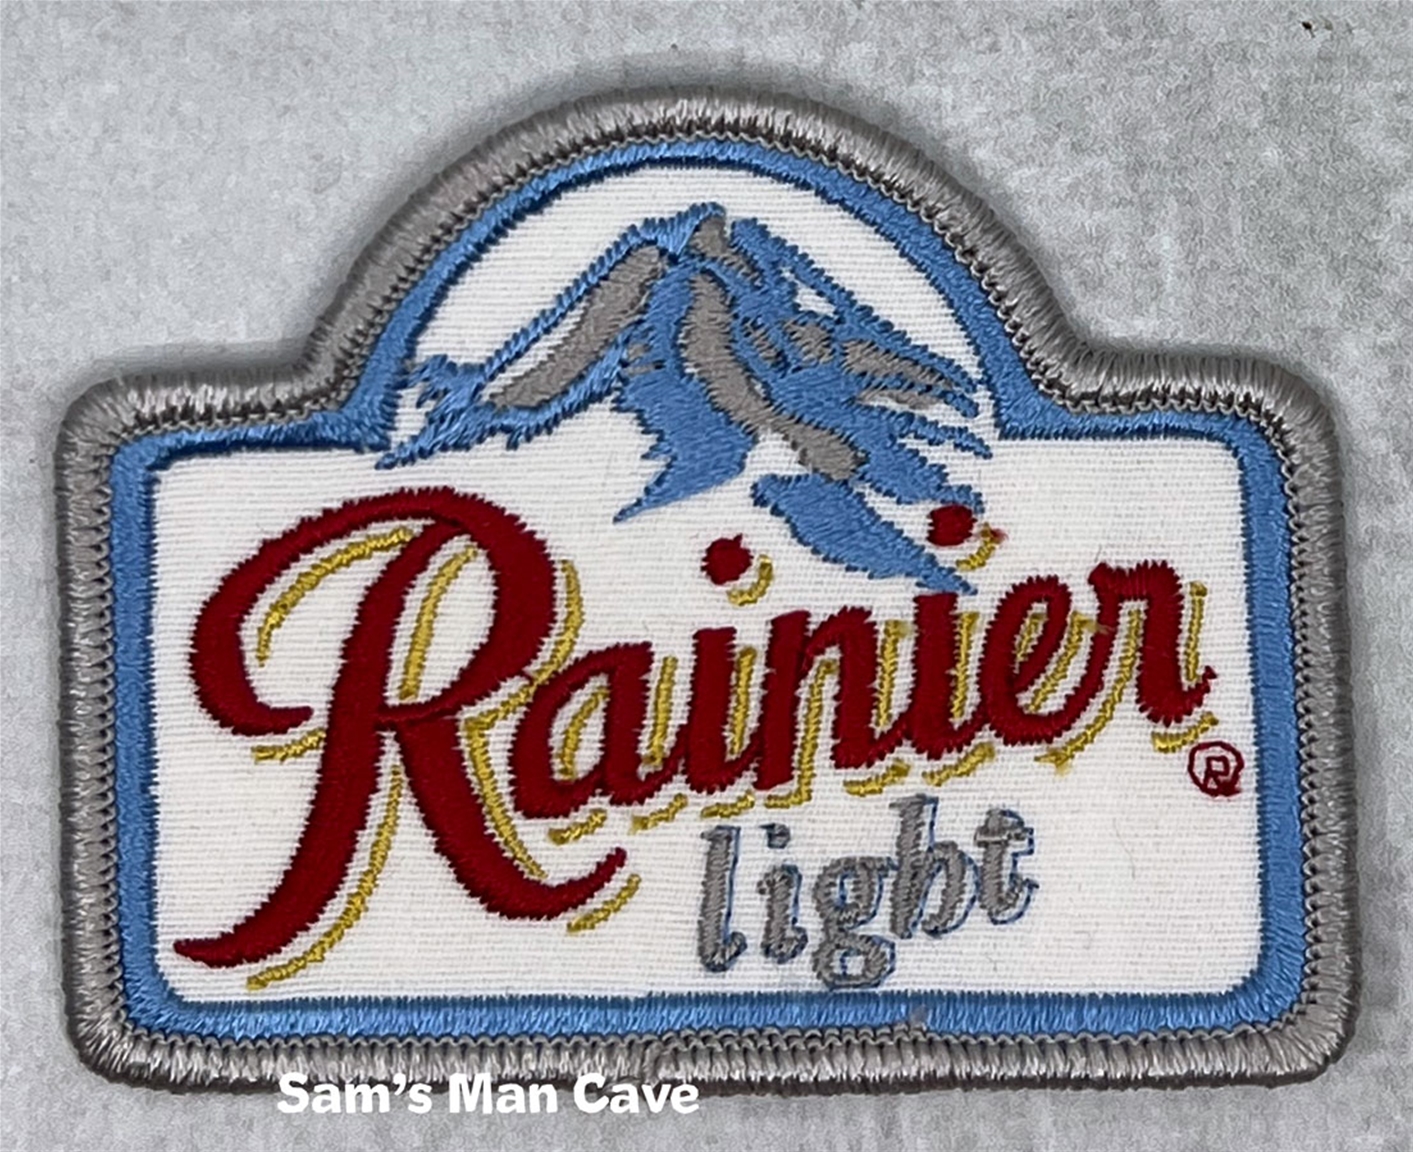 Rainier light Beer Patch